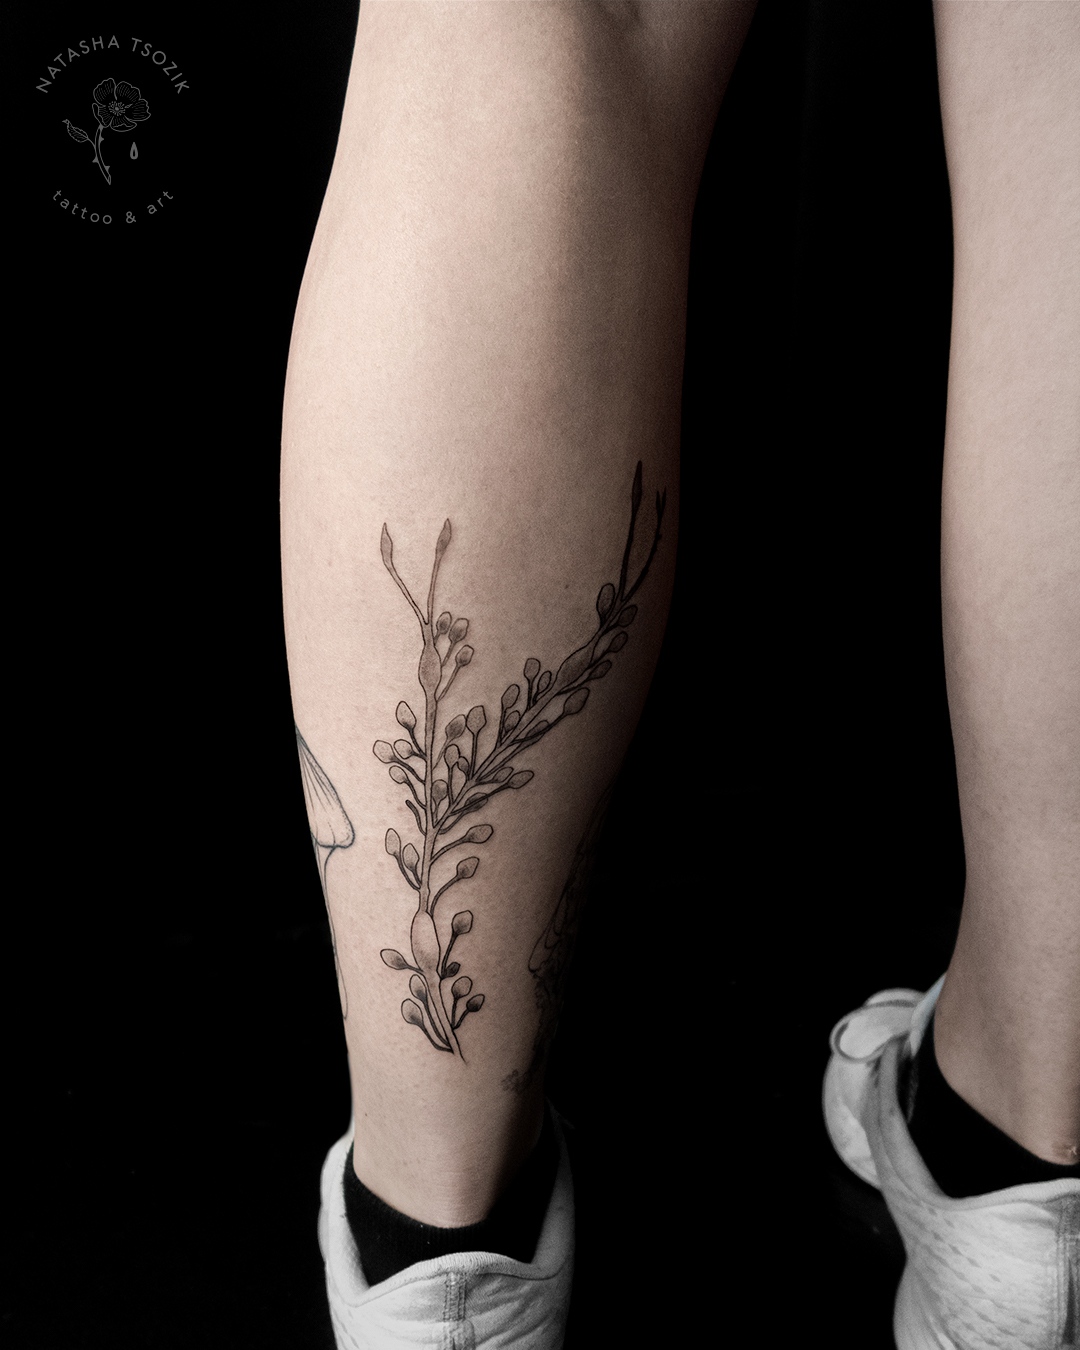 Seaweed Tattoo by Natasha Tsozik